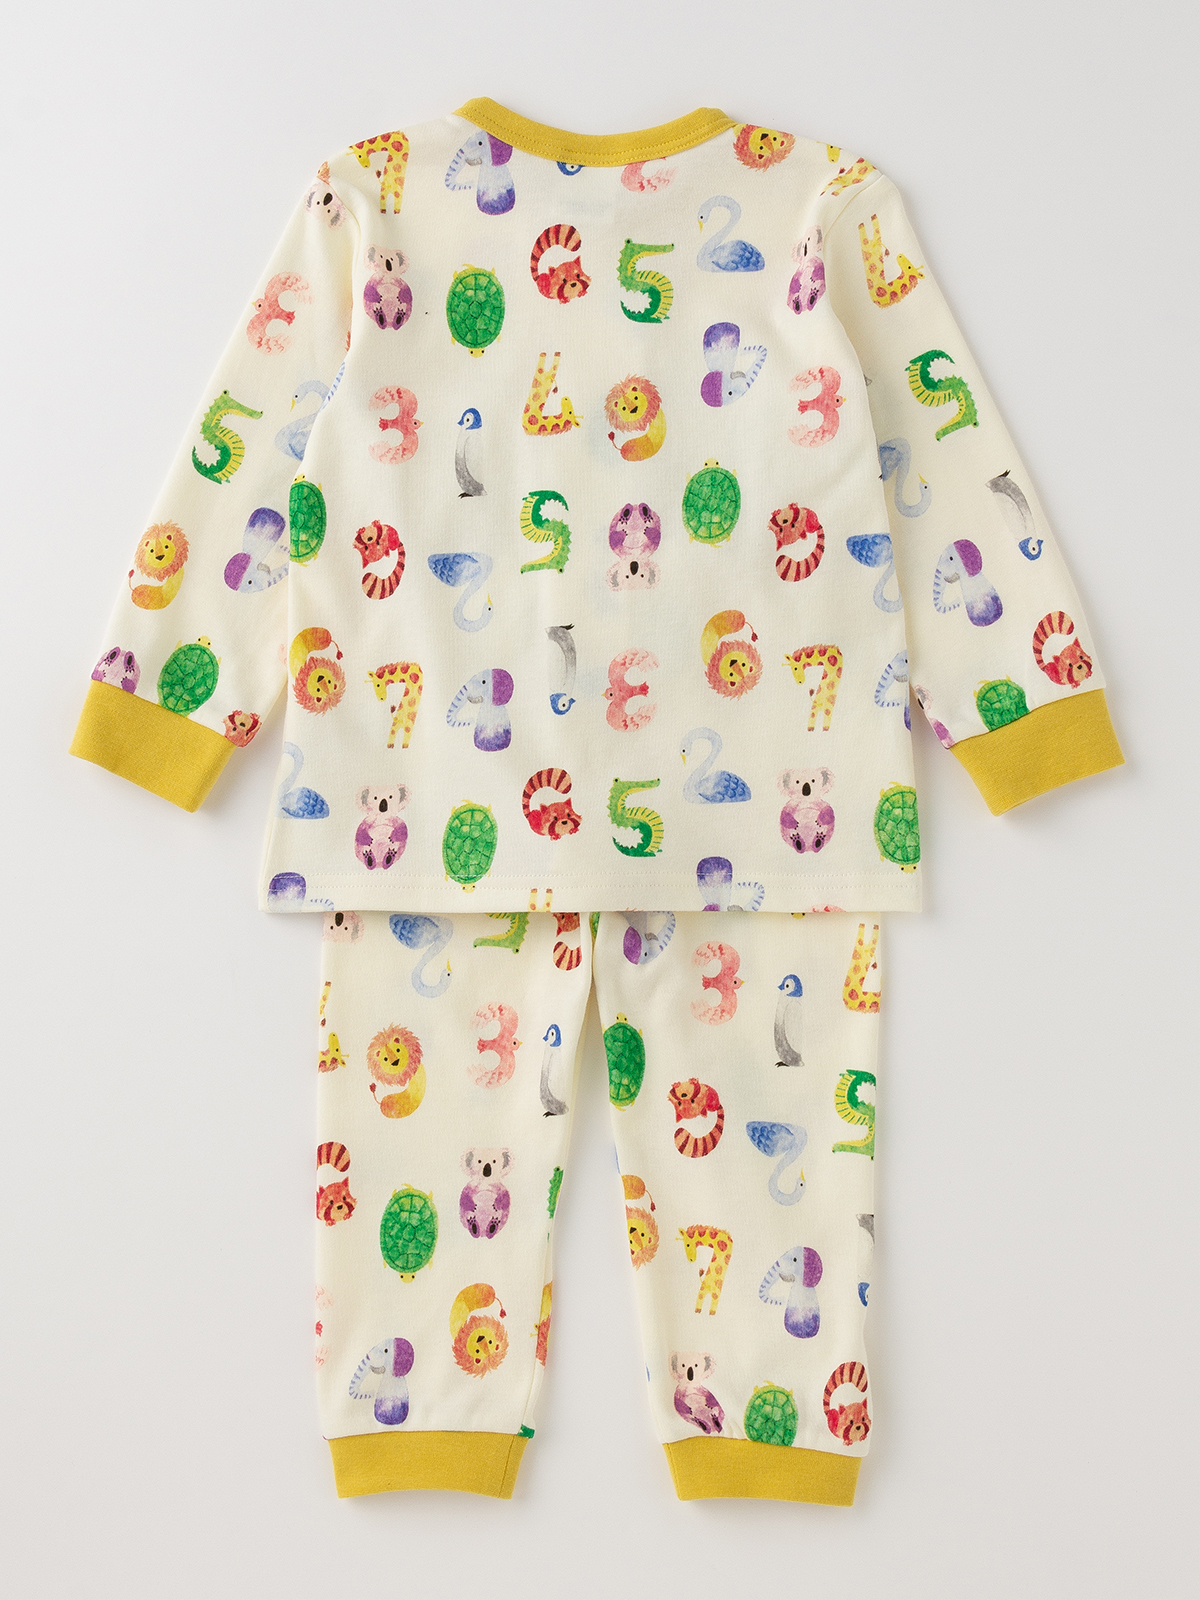 BITZ】どうぶつナンバープリントパジャマ | 赤ちゃん パジャマ 